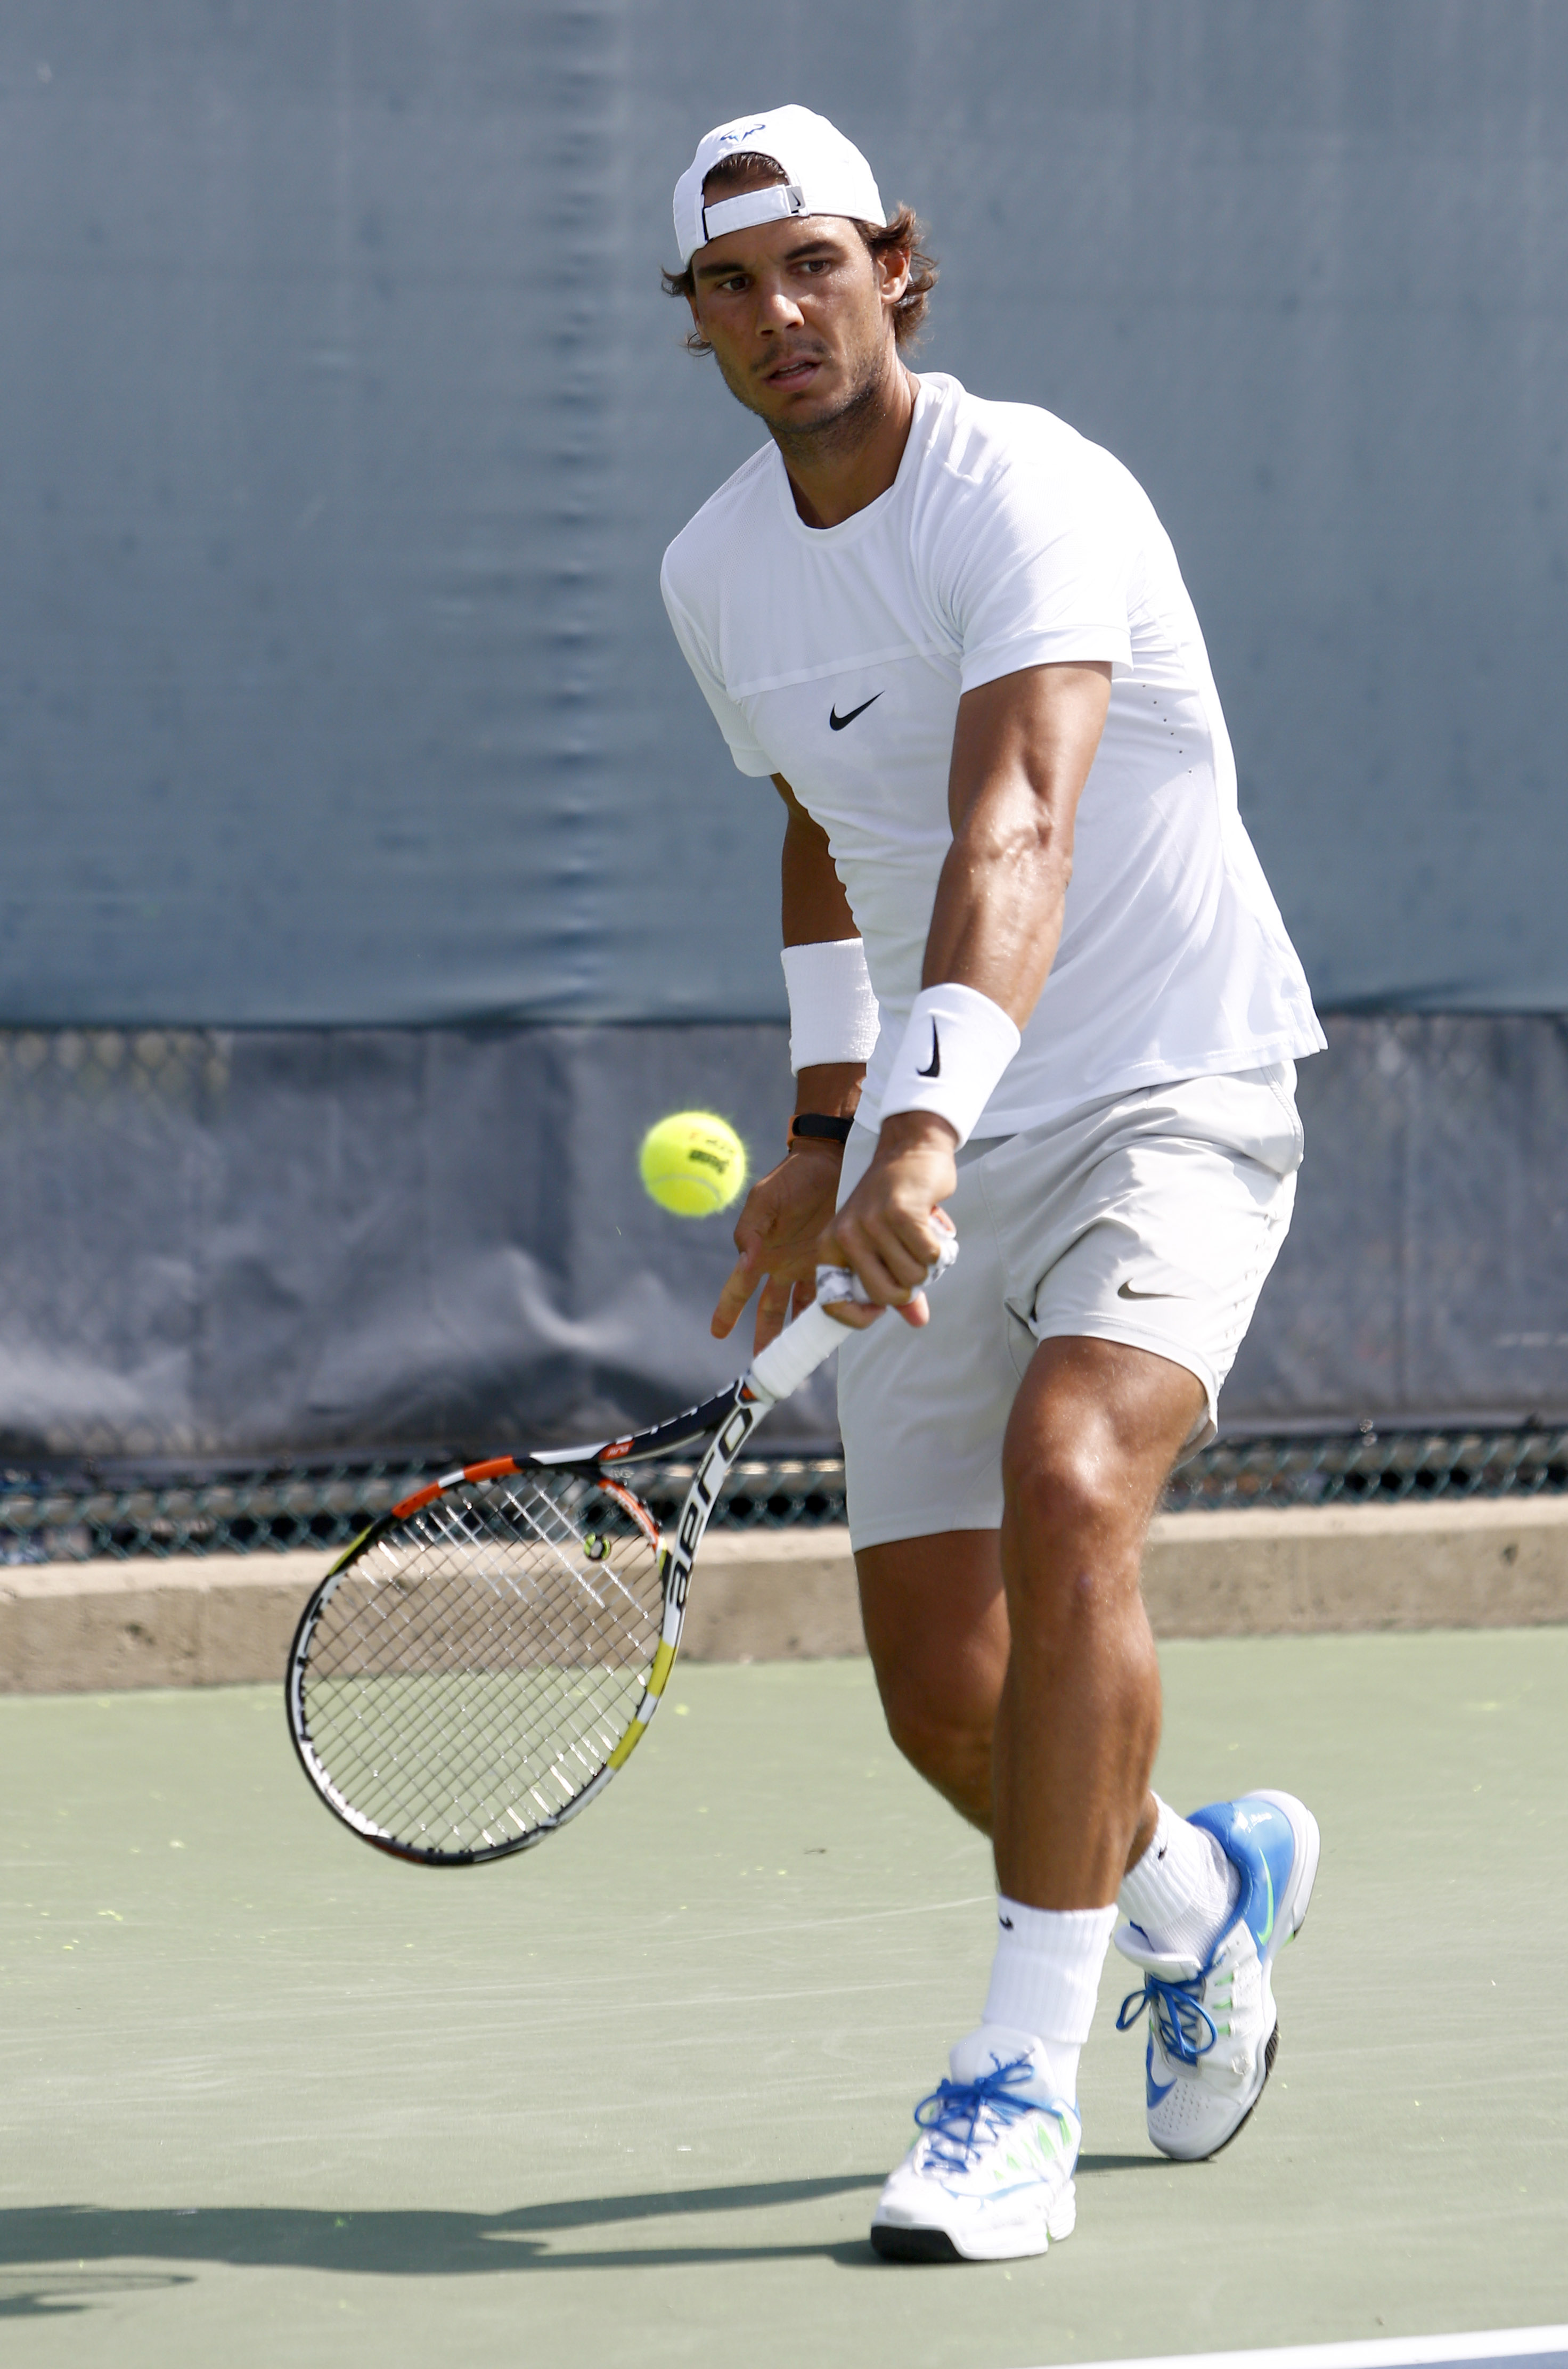 Photos: Rafael Nadal practicing in Cincinnati (Monday, August 17) – Rafael Nadal Fans2944 x 4448